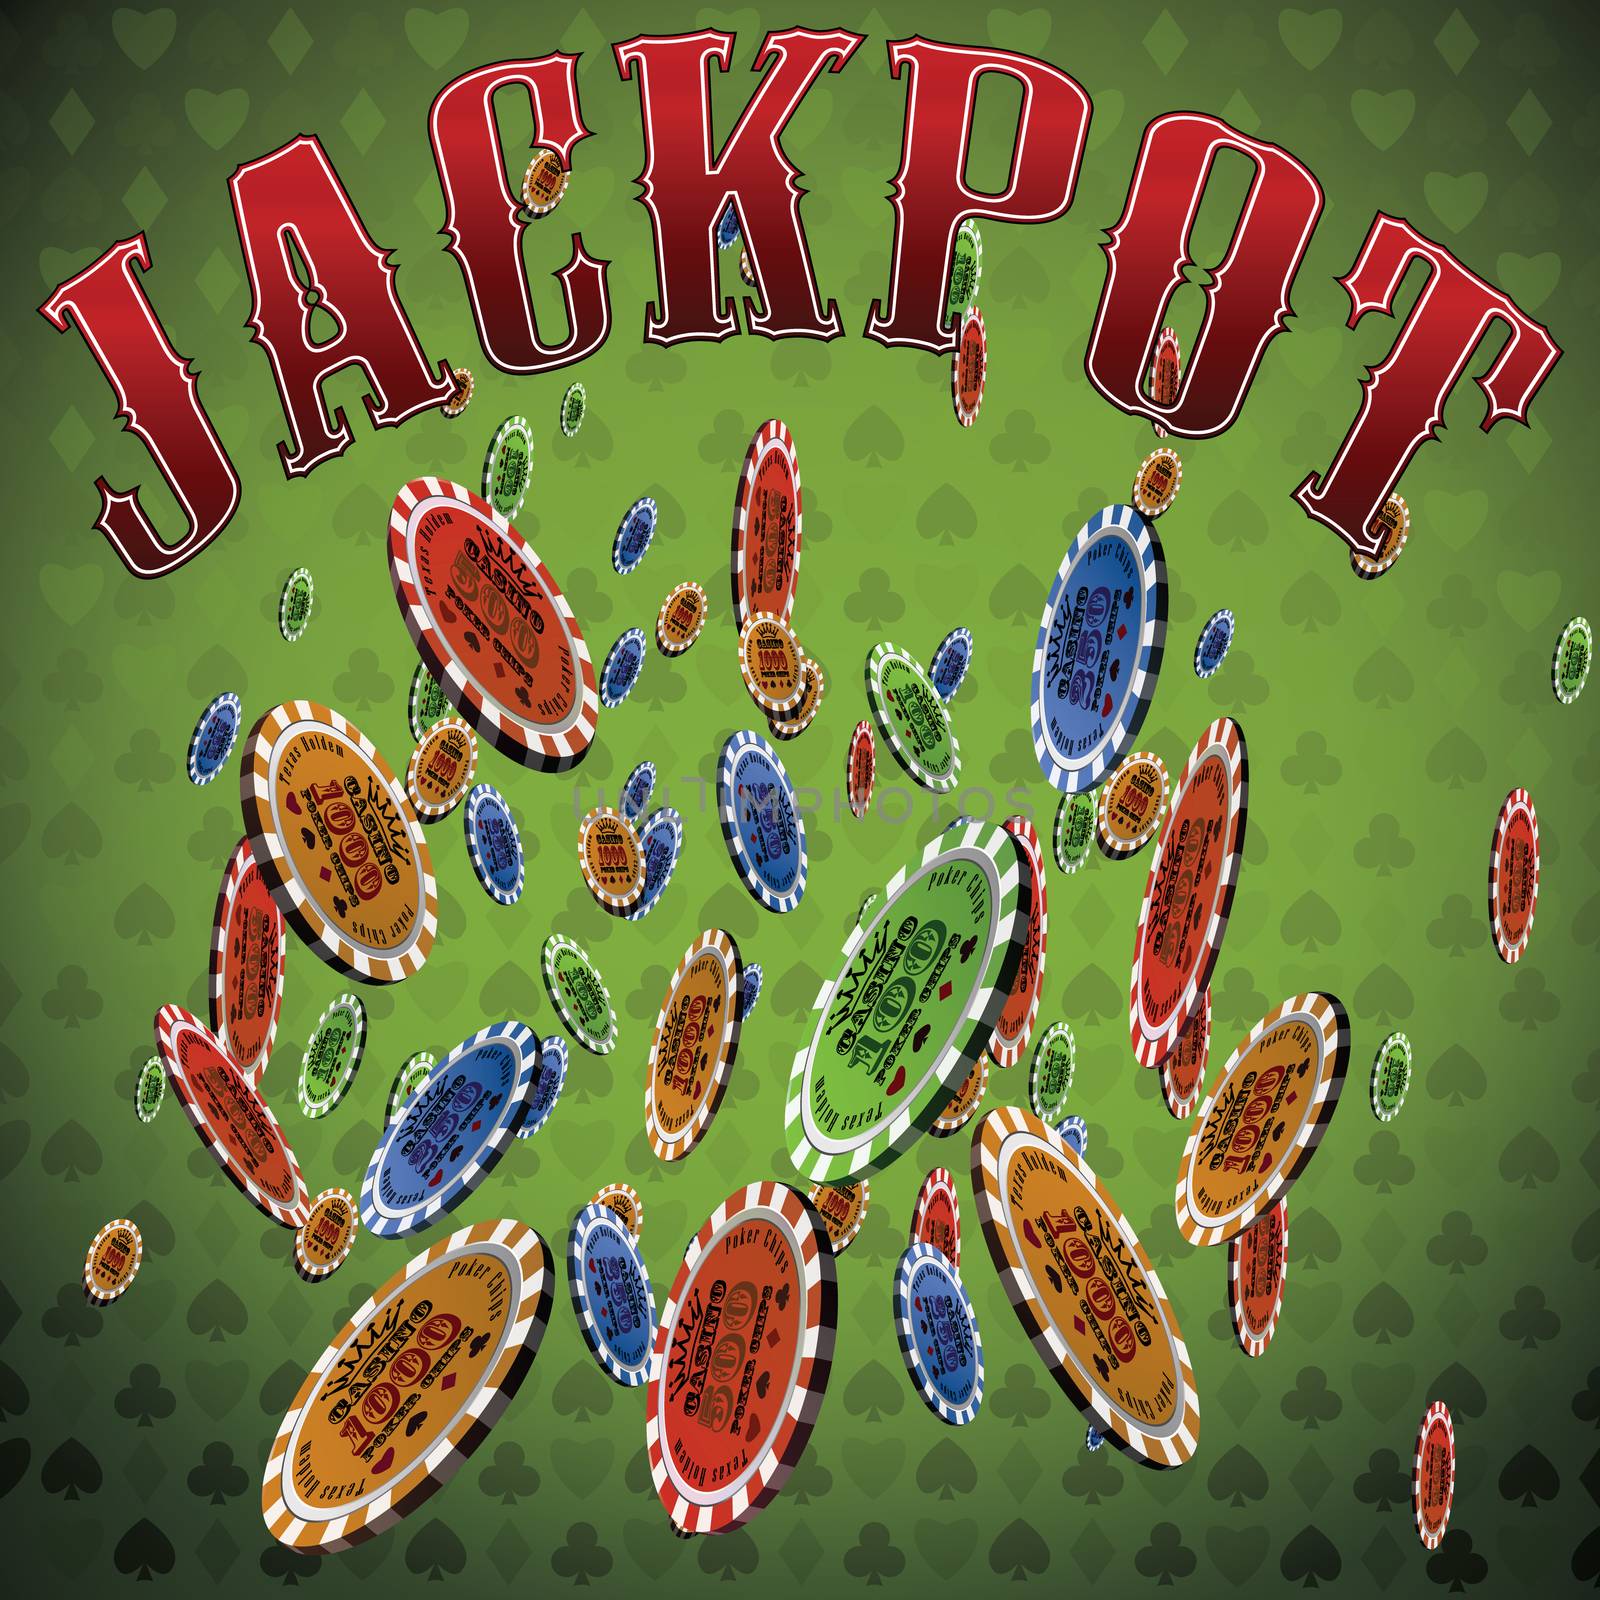 Poker chips many falling green background text Jackpot.